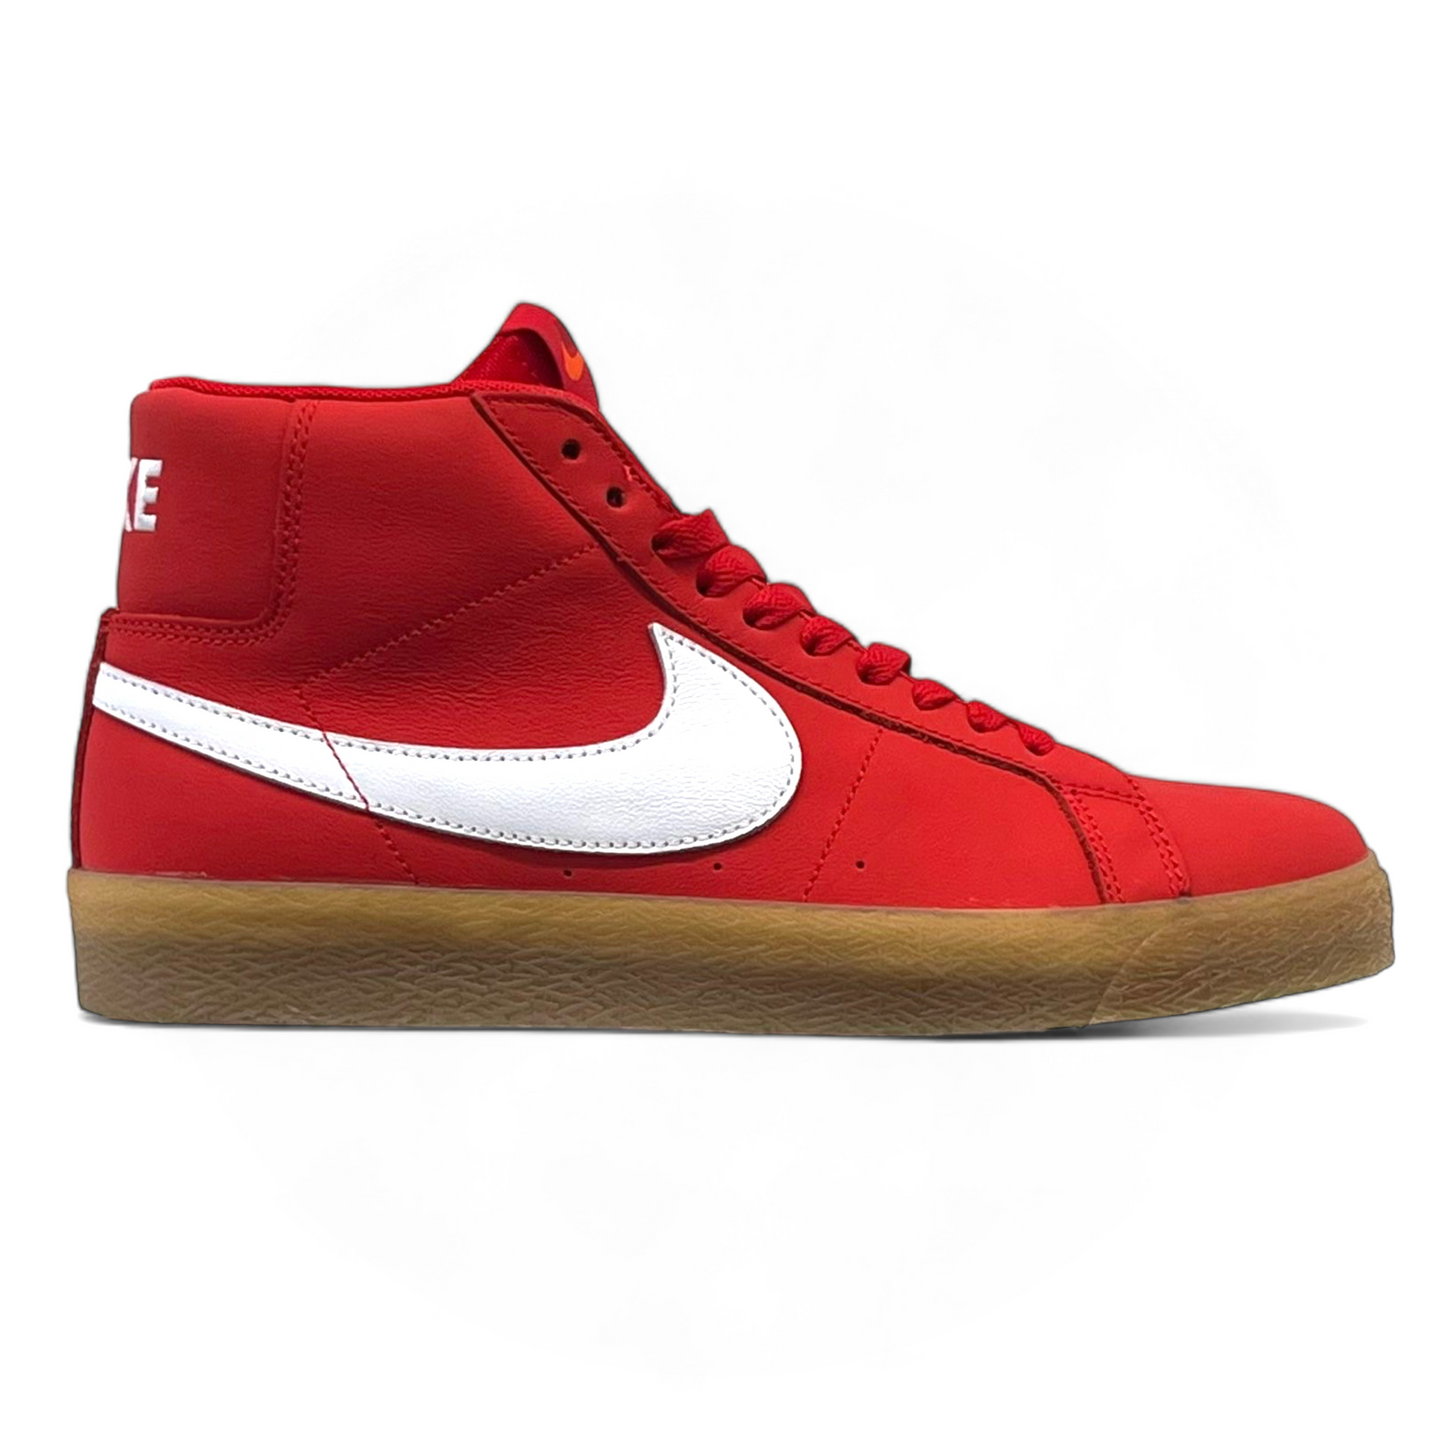 Nike SB - Blazer Mid Orange Label Shoes - Red/White/Gum